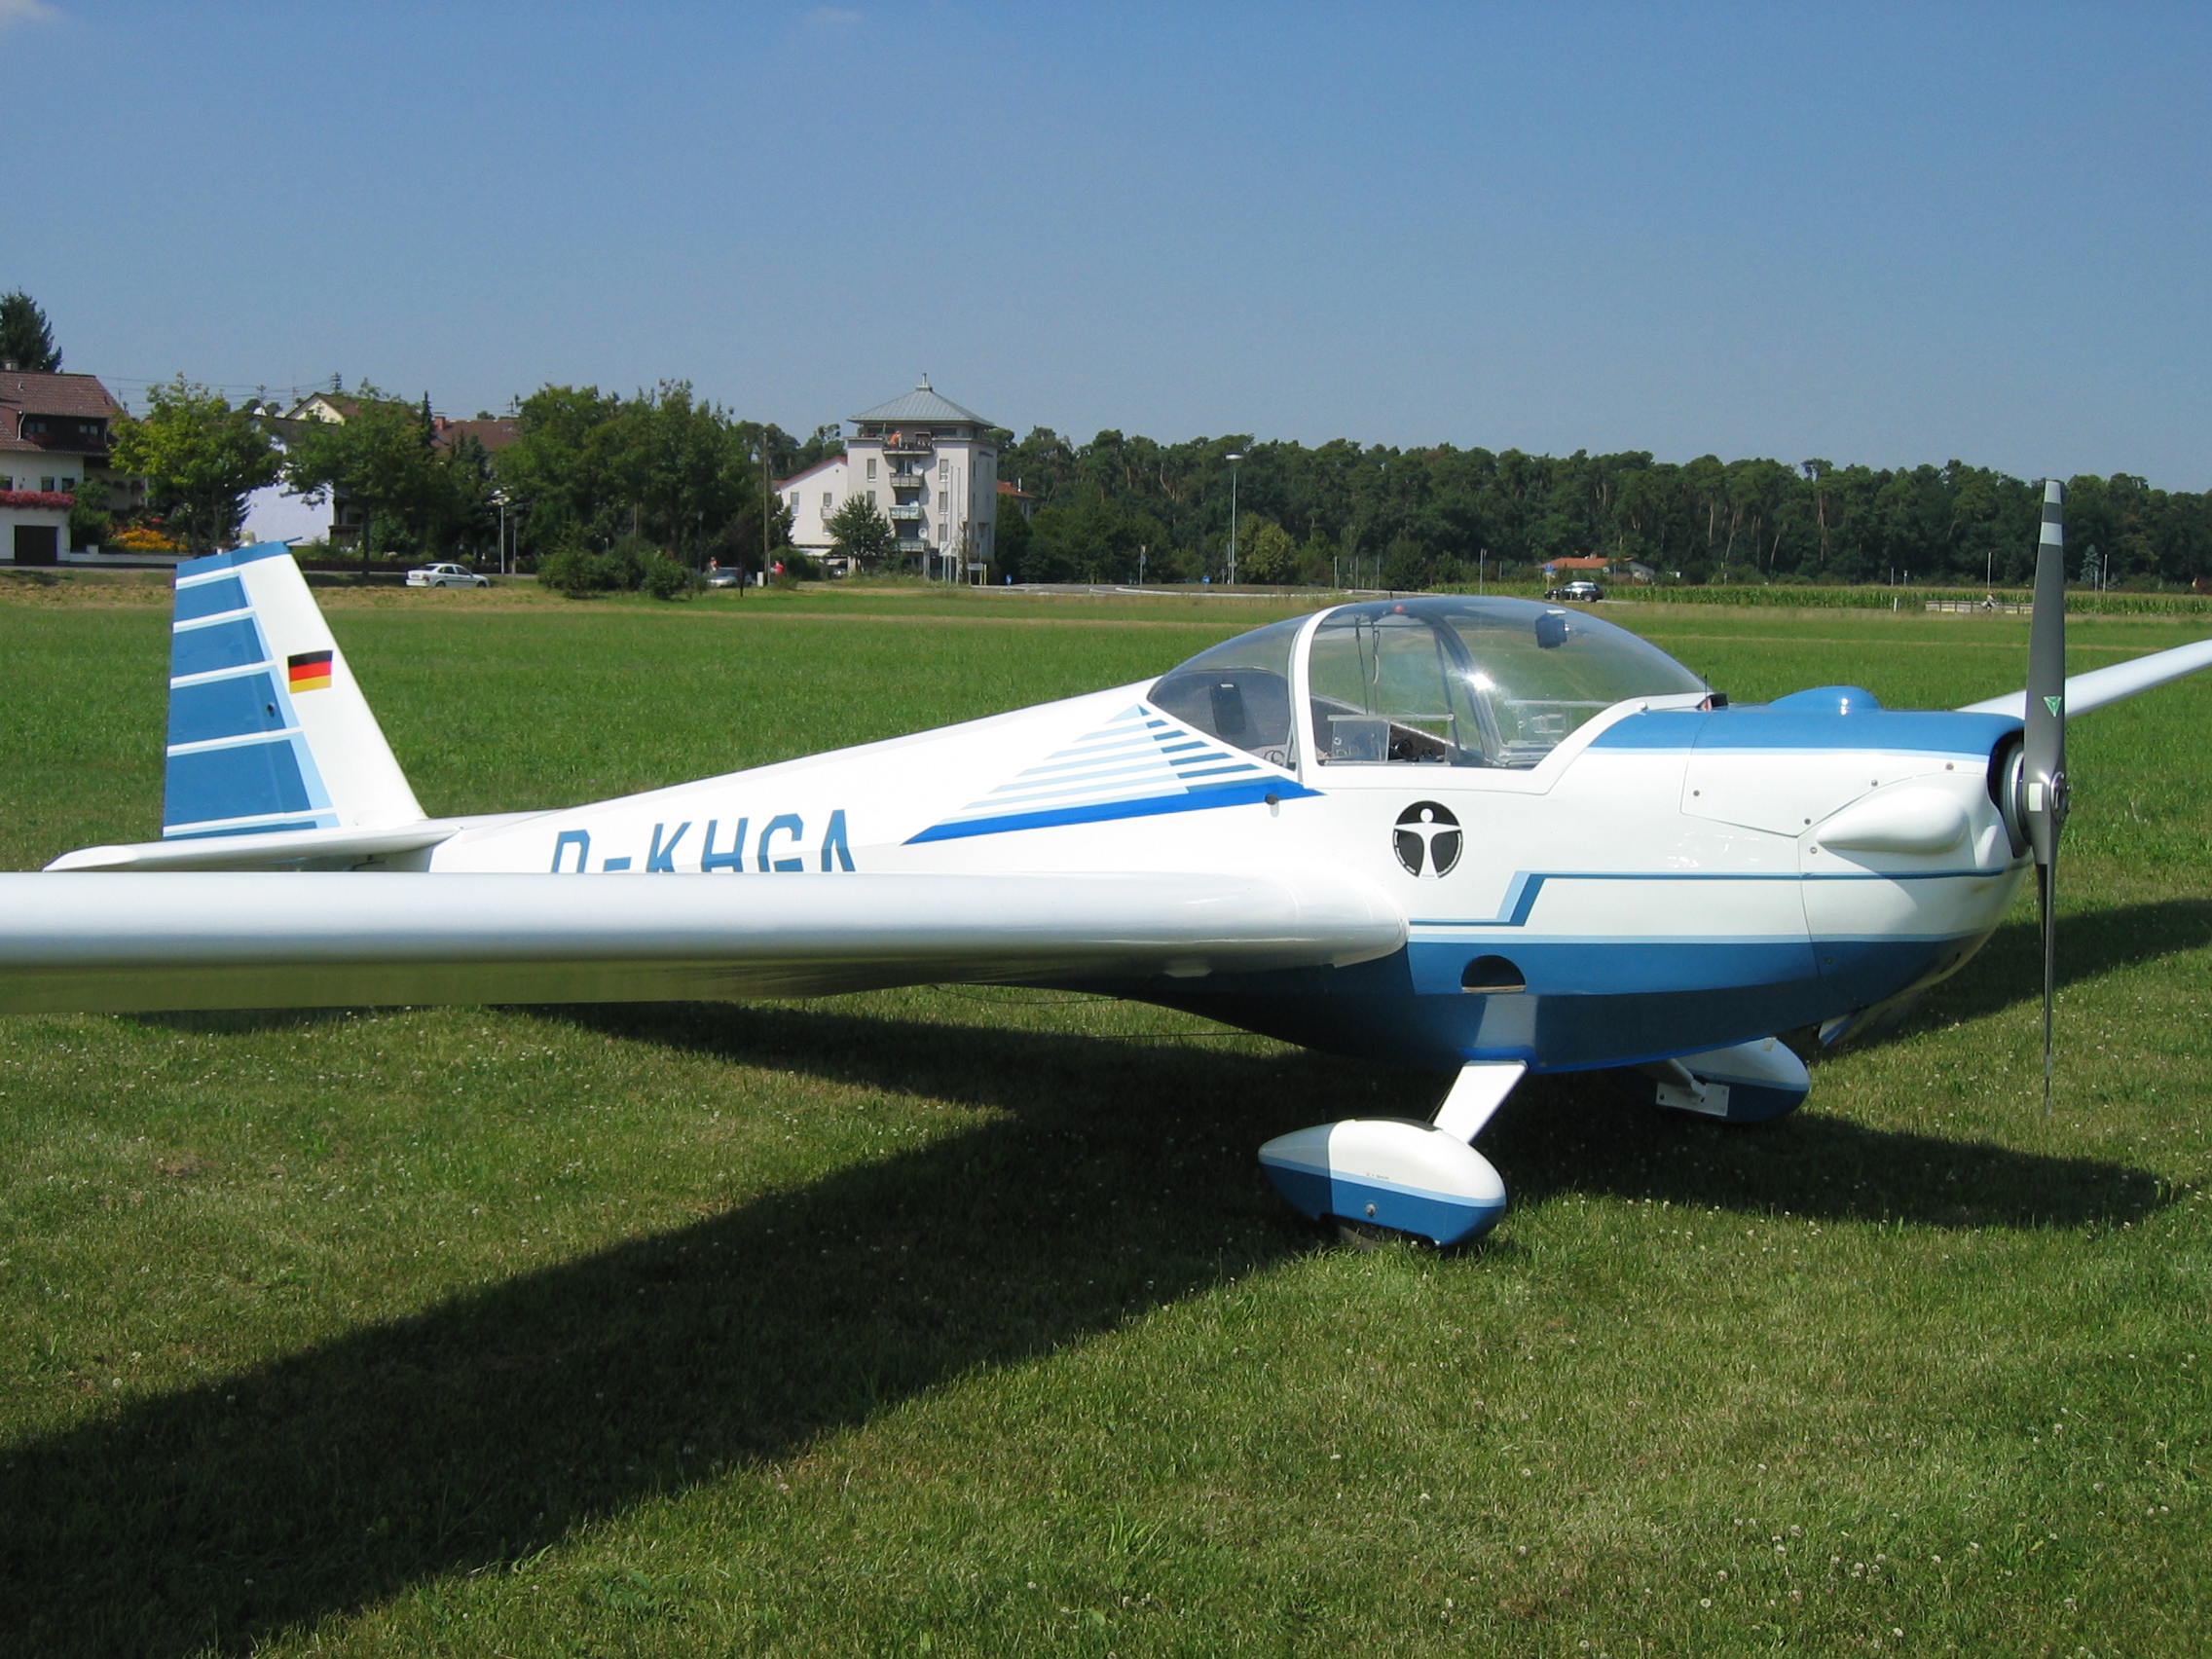 Datei:Flugplatz Flugzeug Blau.jpg